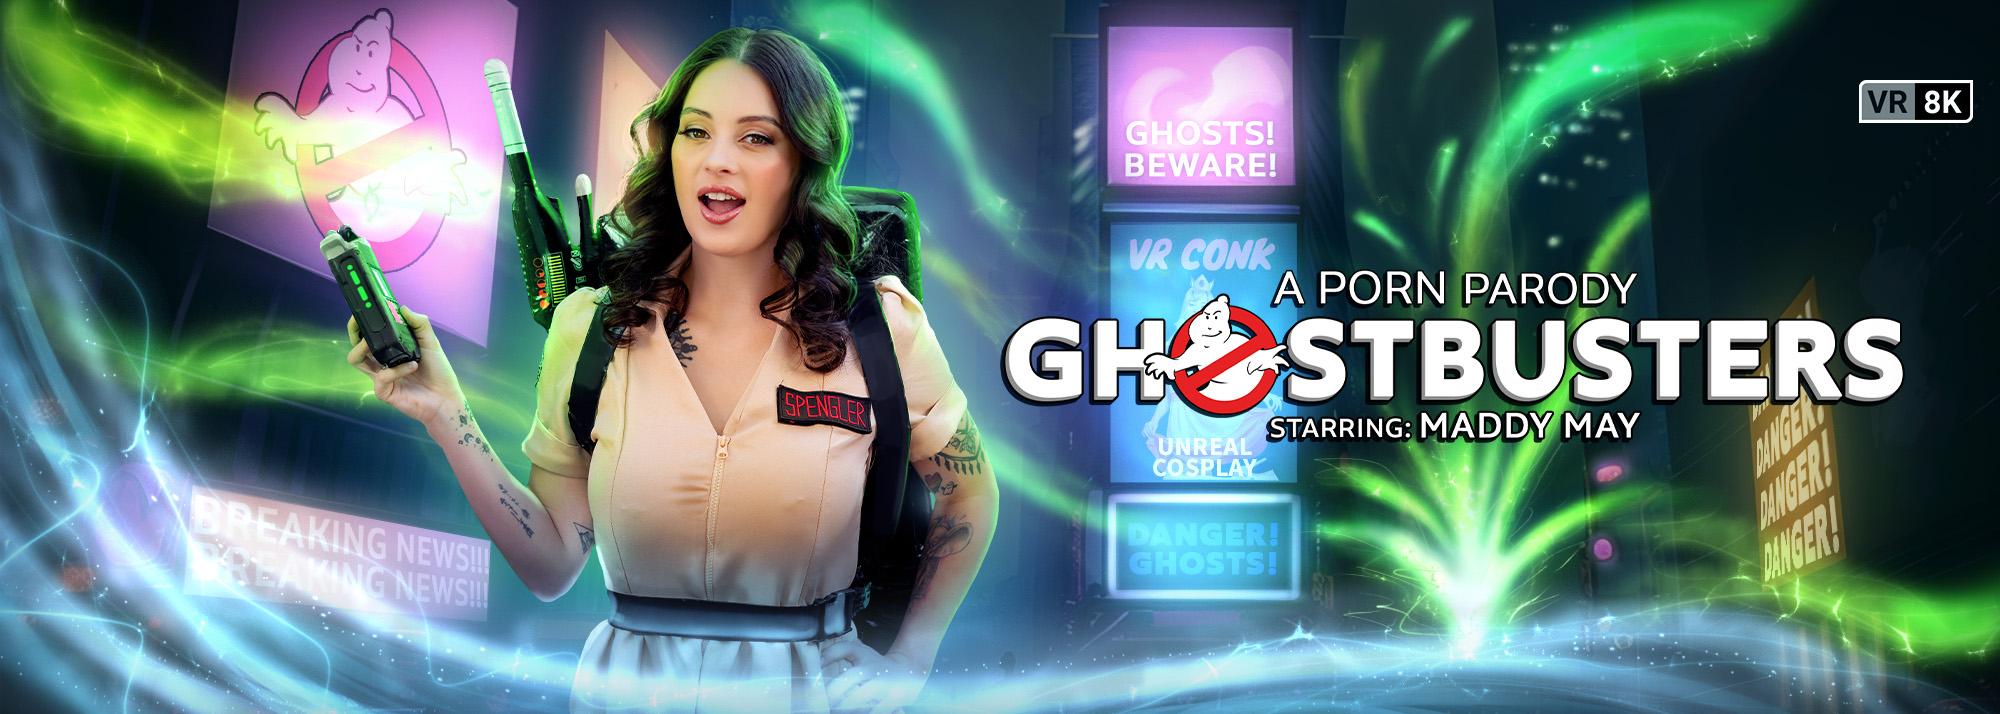 Ghostbusters (A Porn Parody) Slideshow